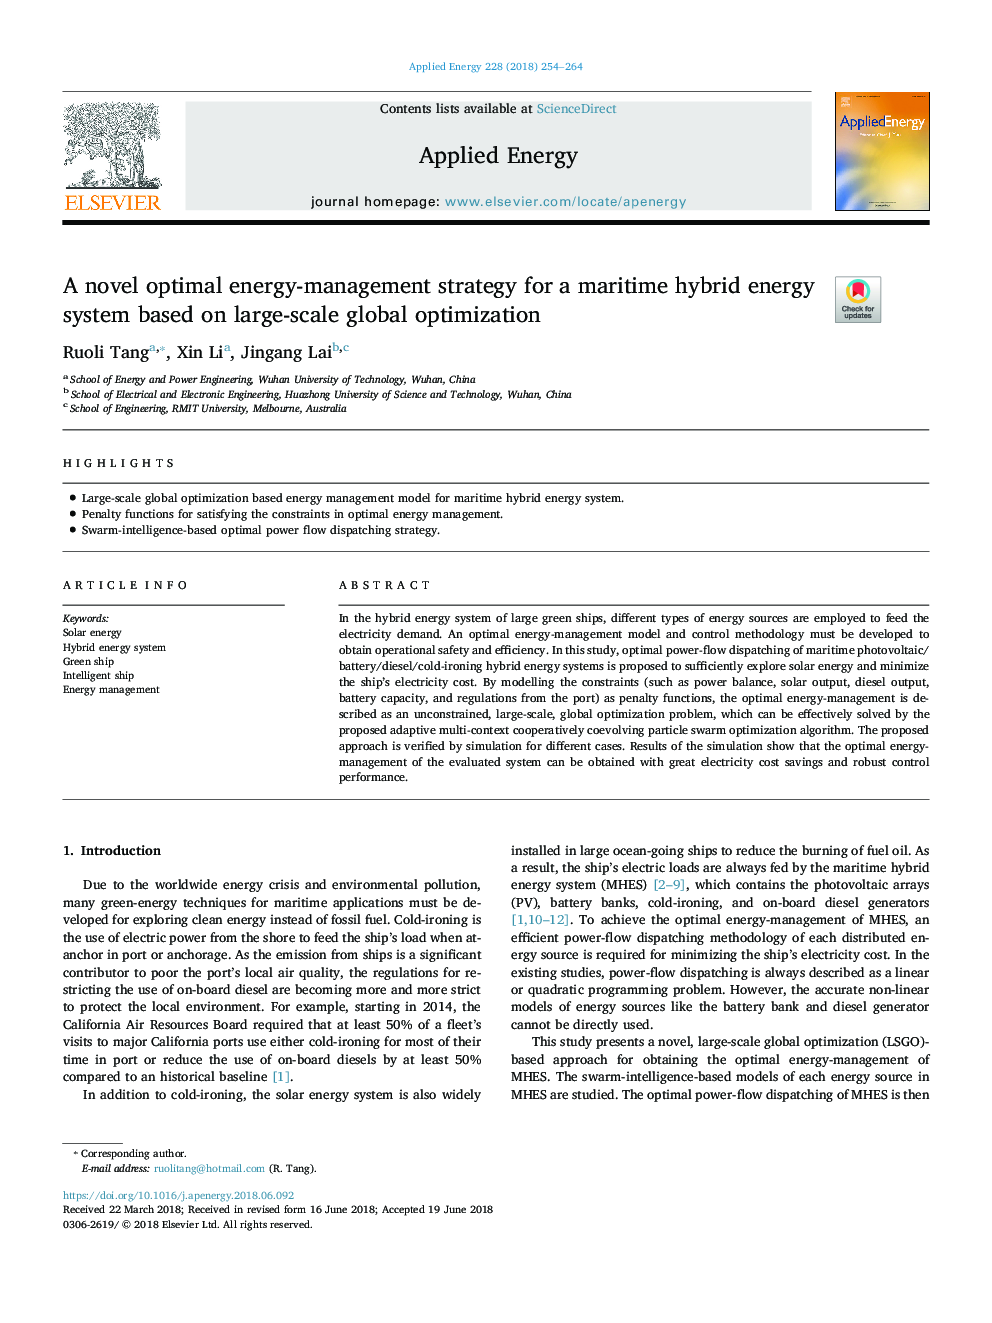 A novel optimal energy-management strategy for a maritime hybrid energy system based on large-scale global optimization